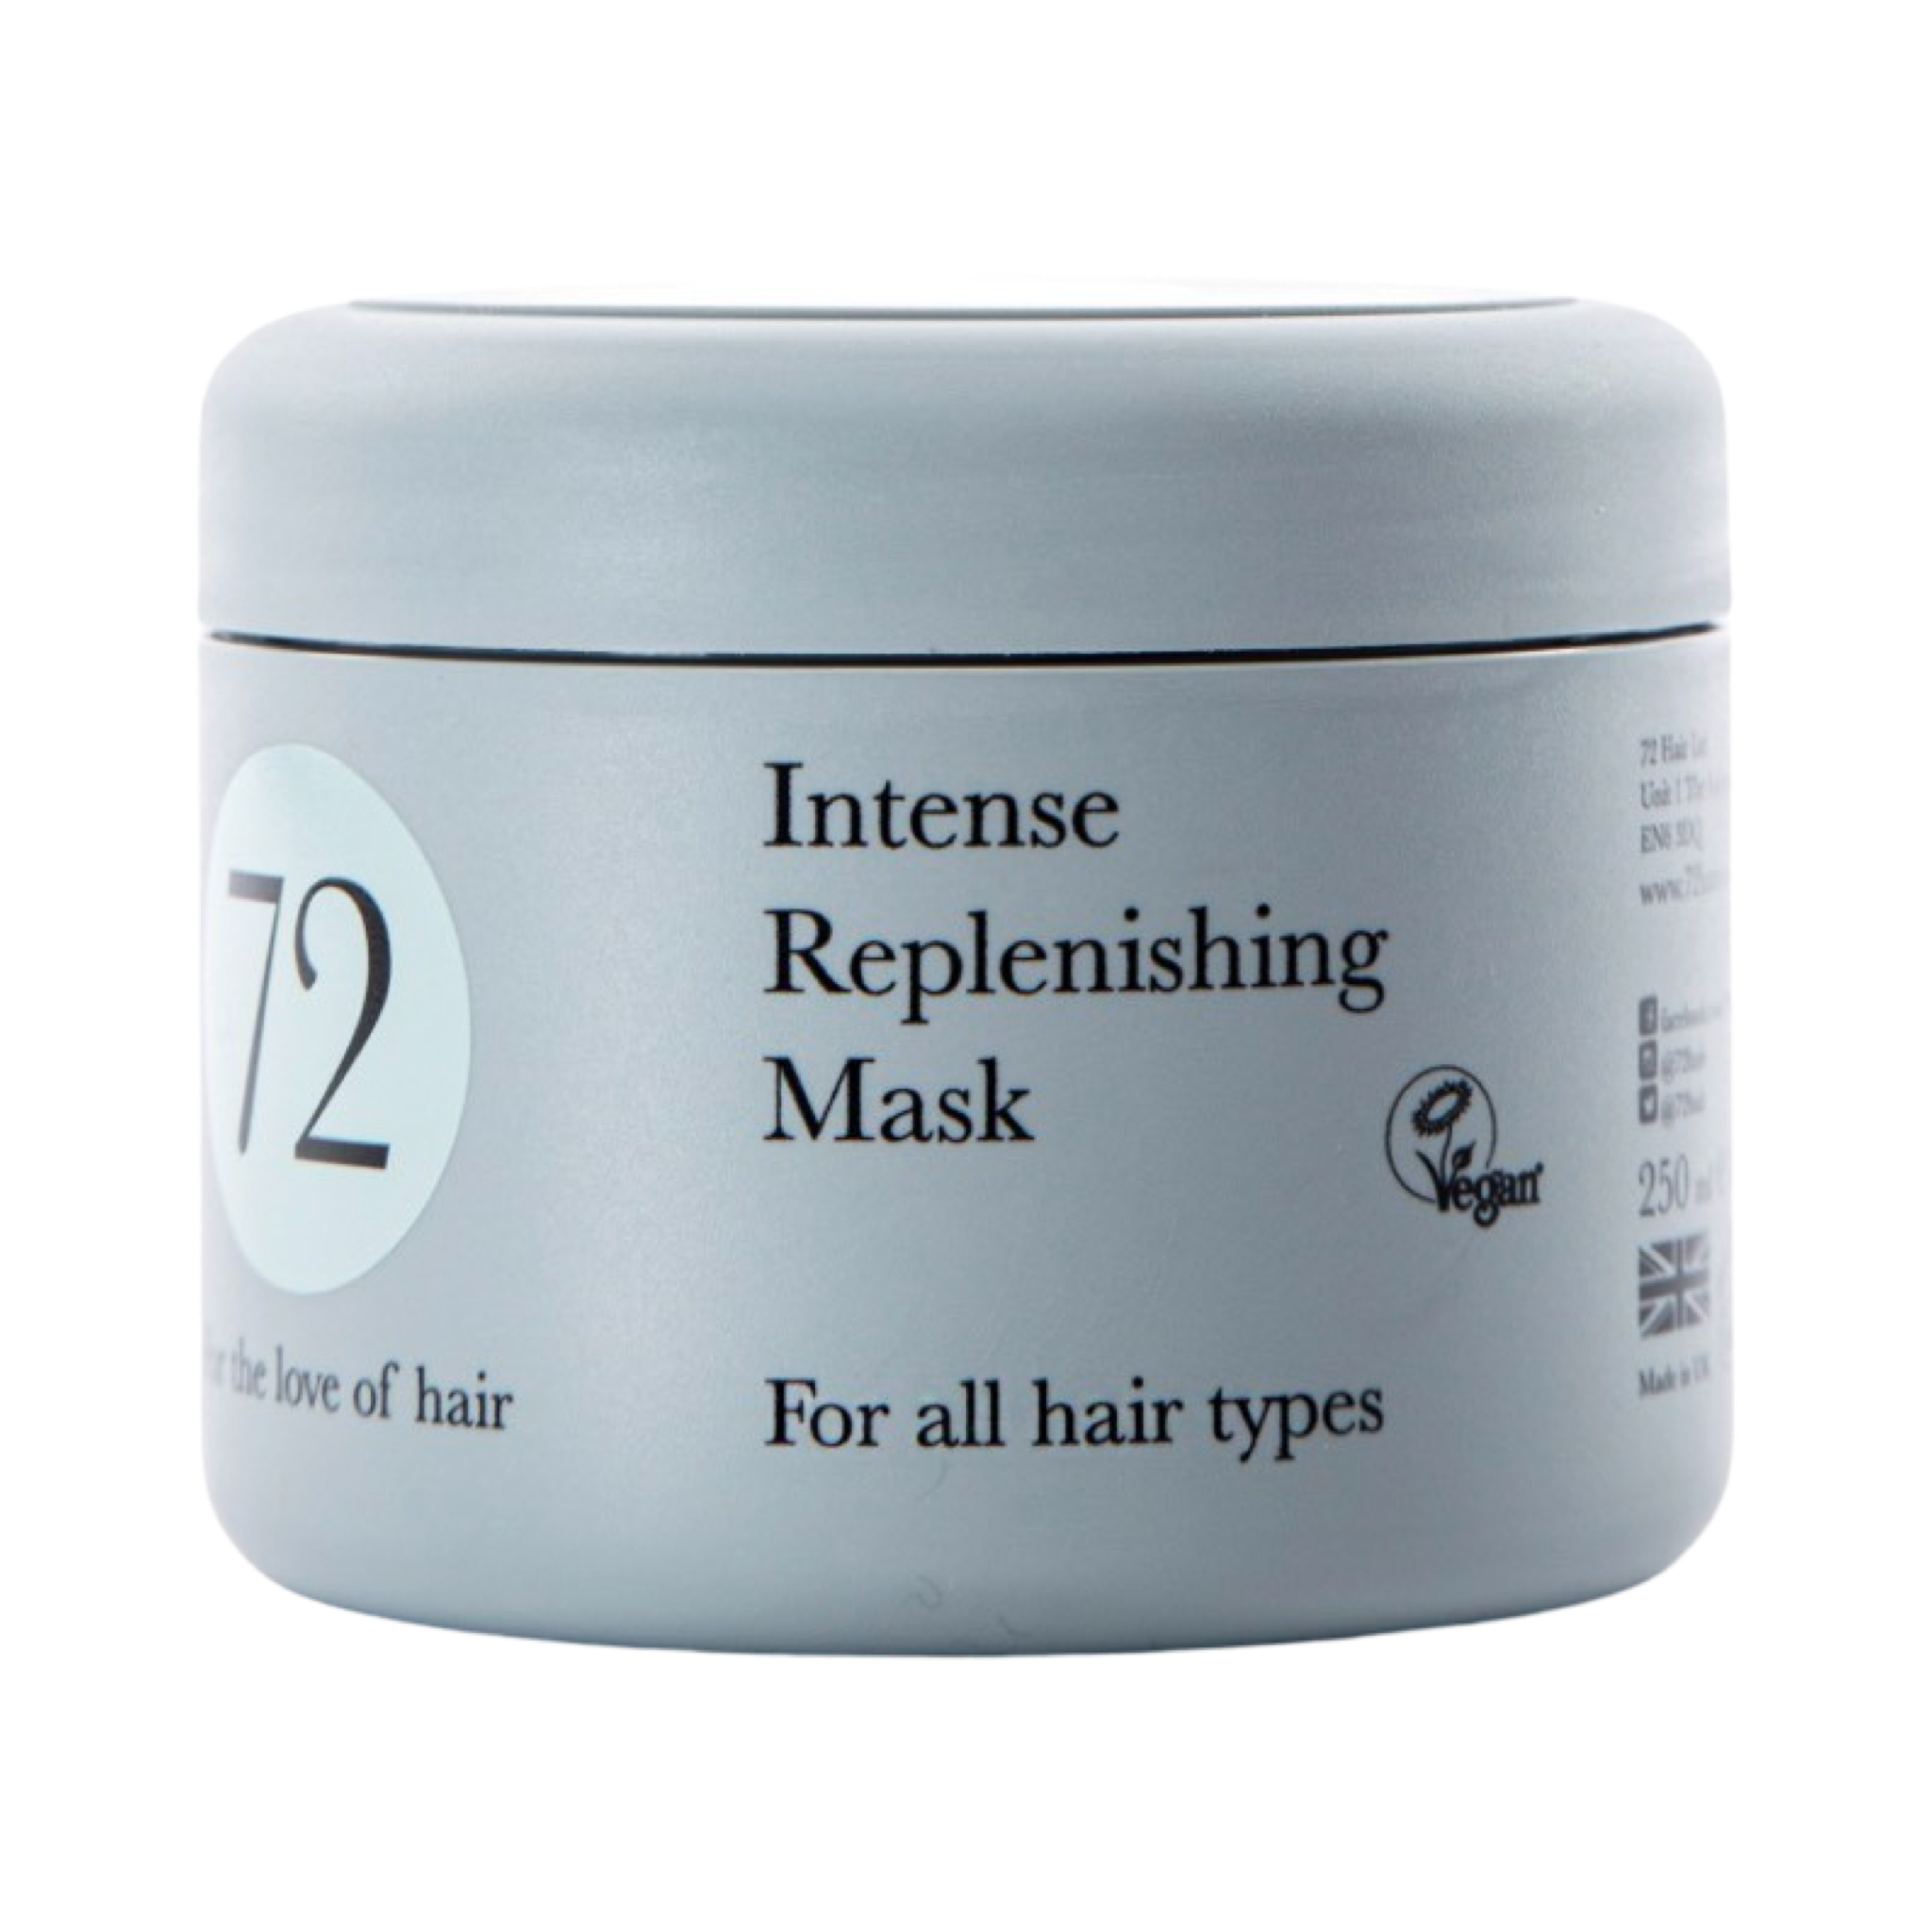 72 Replenishing Mask